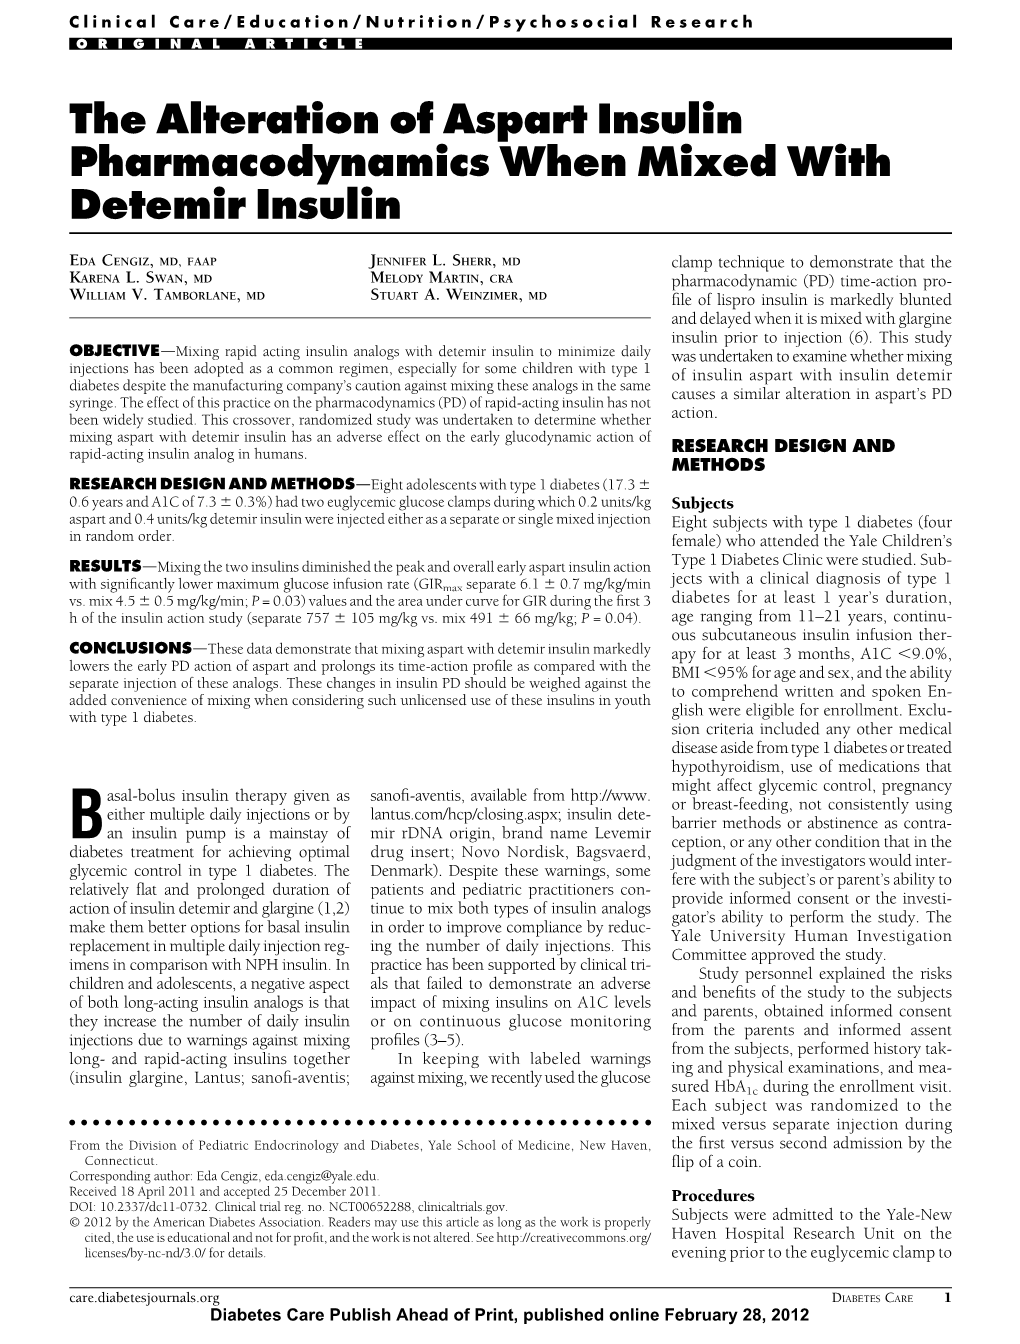 The Alteration of Aspart Insulin Pharmacodynamics When Mixed